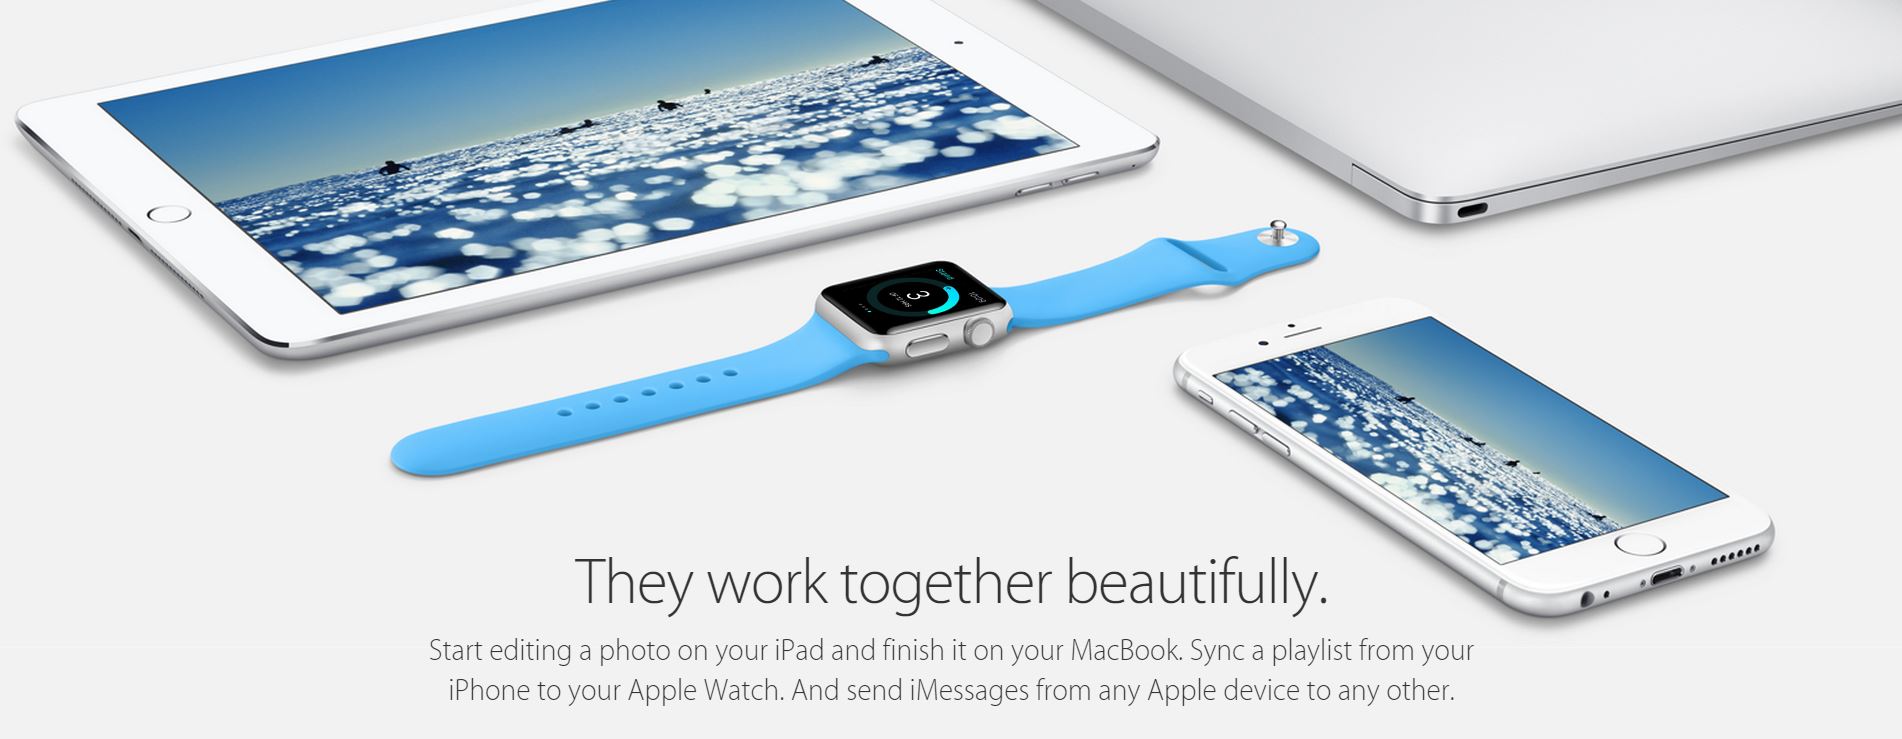 Apple Watch conectat iphone mac